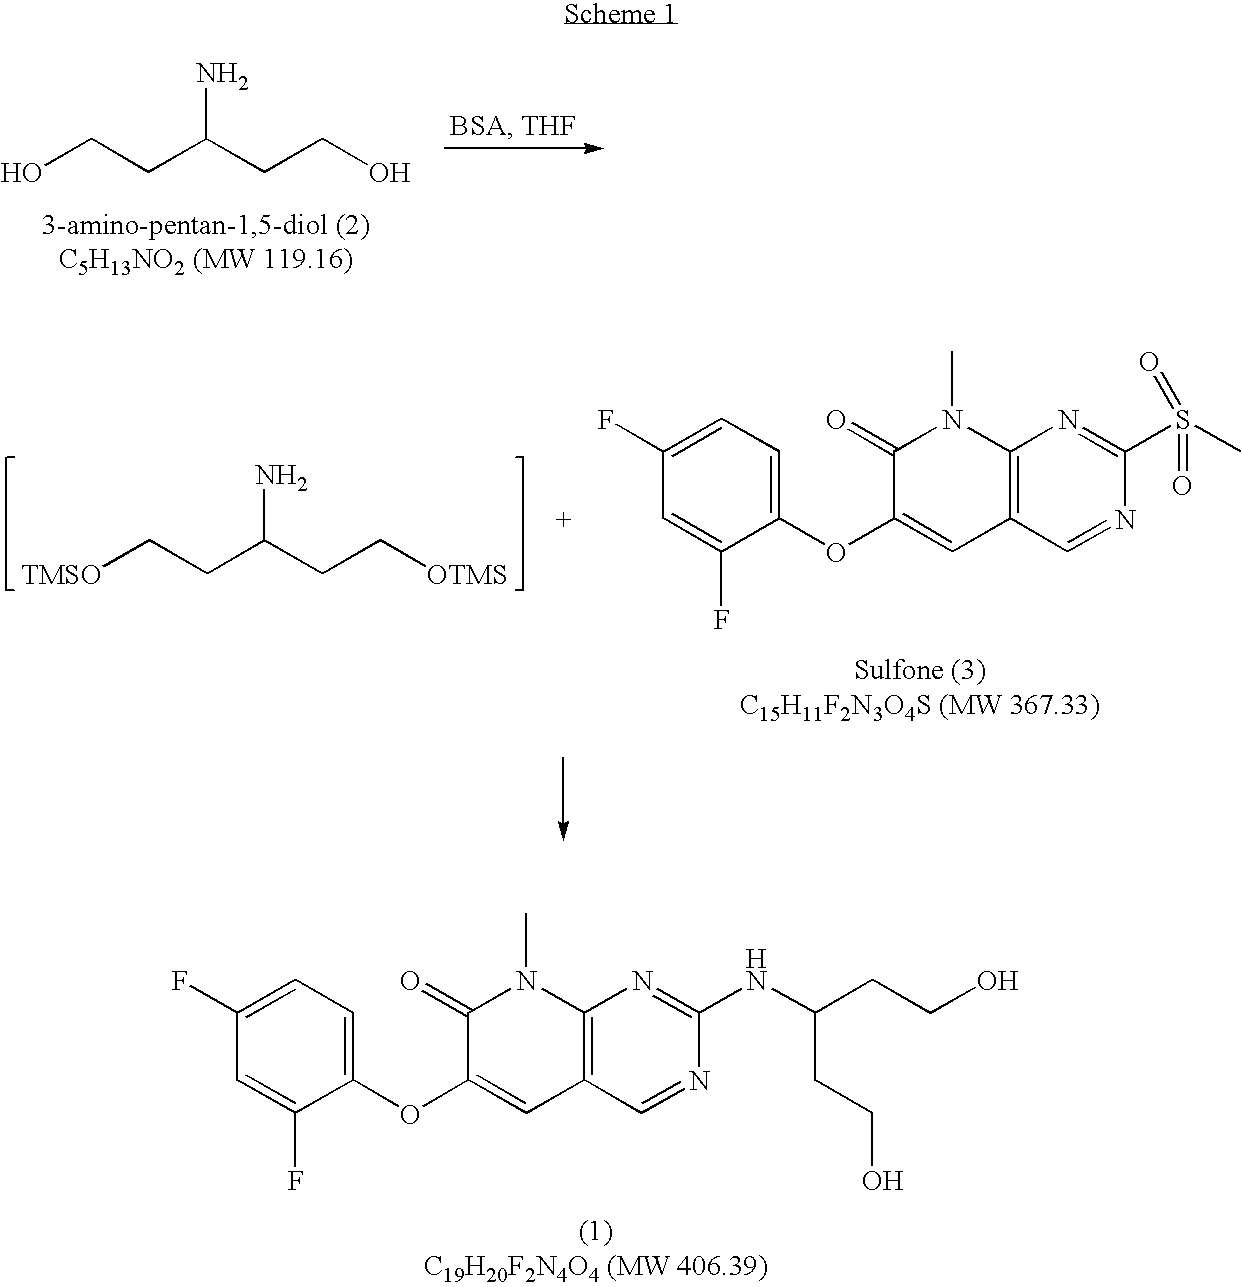 Novel process for the preparation of 3-amino-pentan-1,5-diol